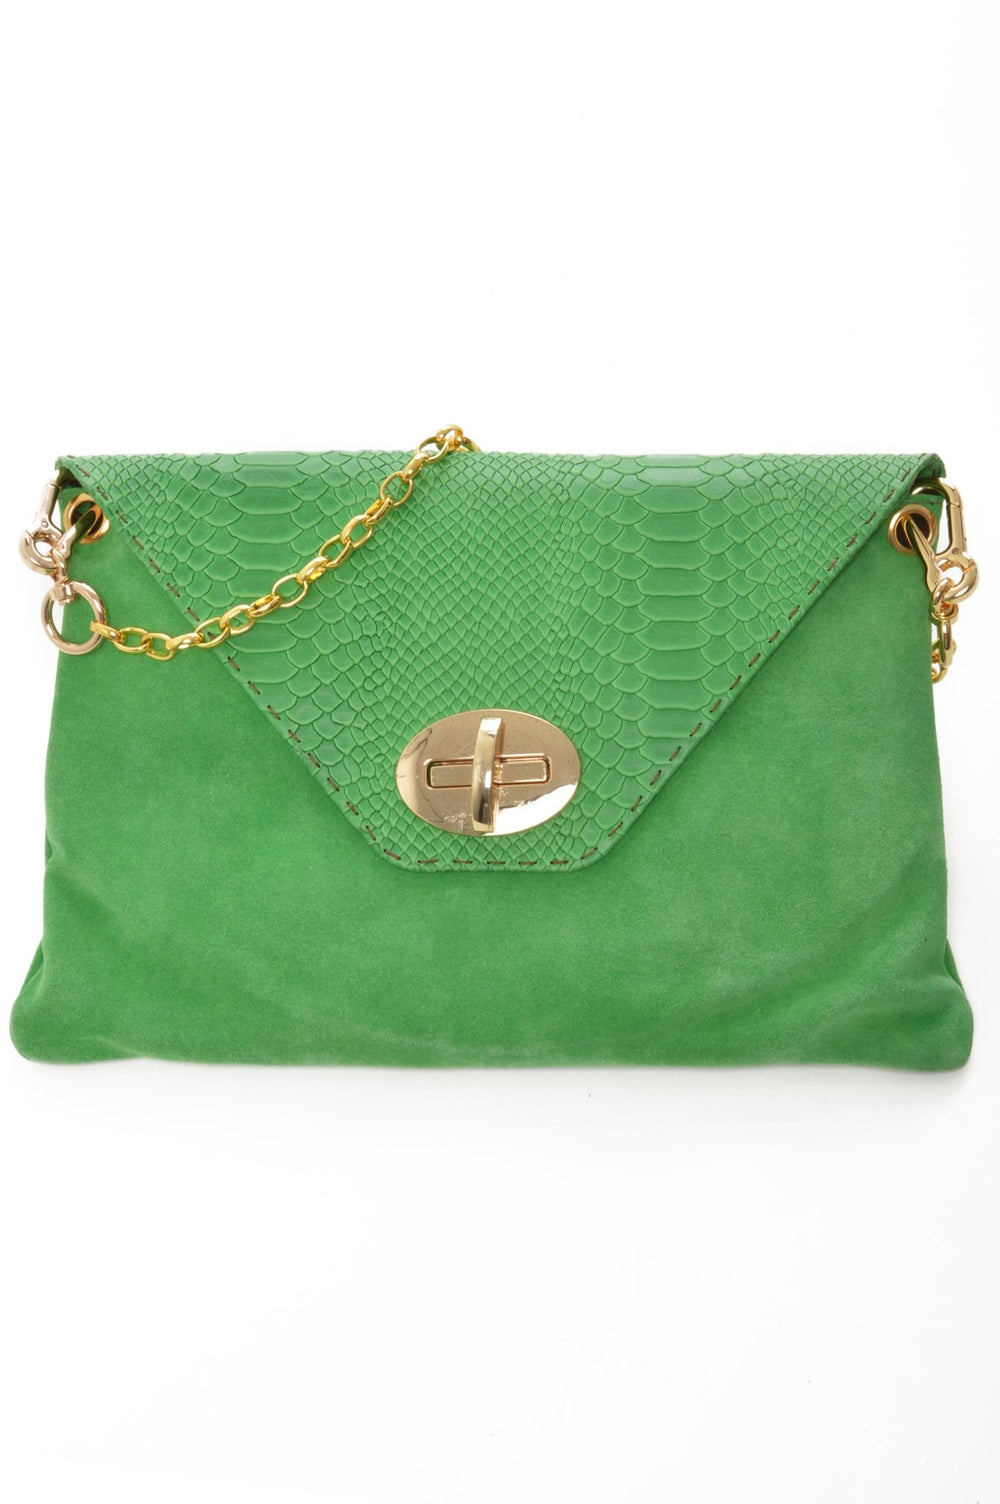 LEONARD Green Python - Carla Mancini Handbags